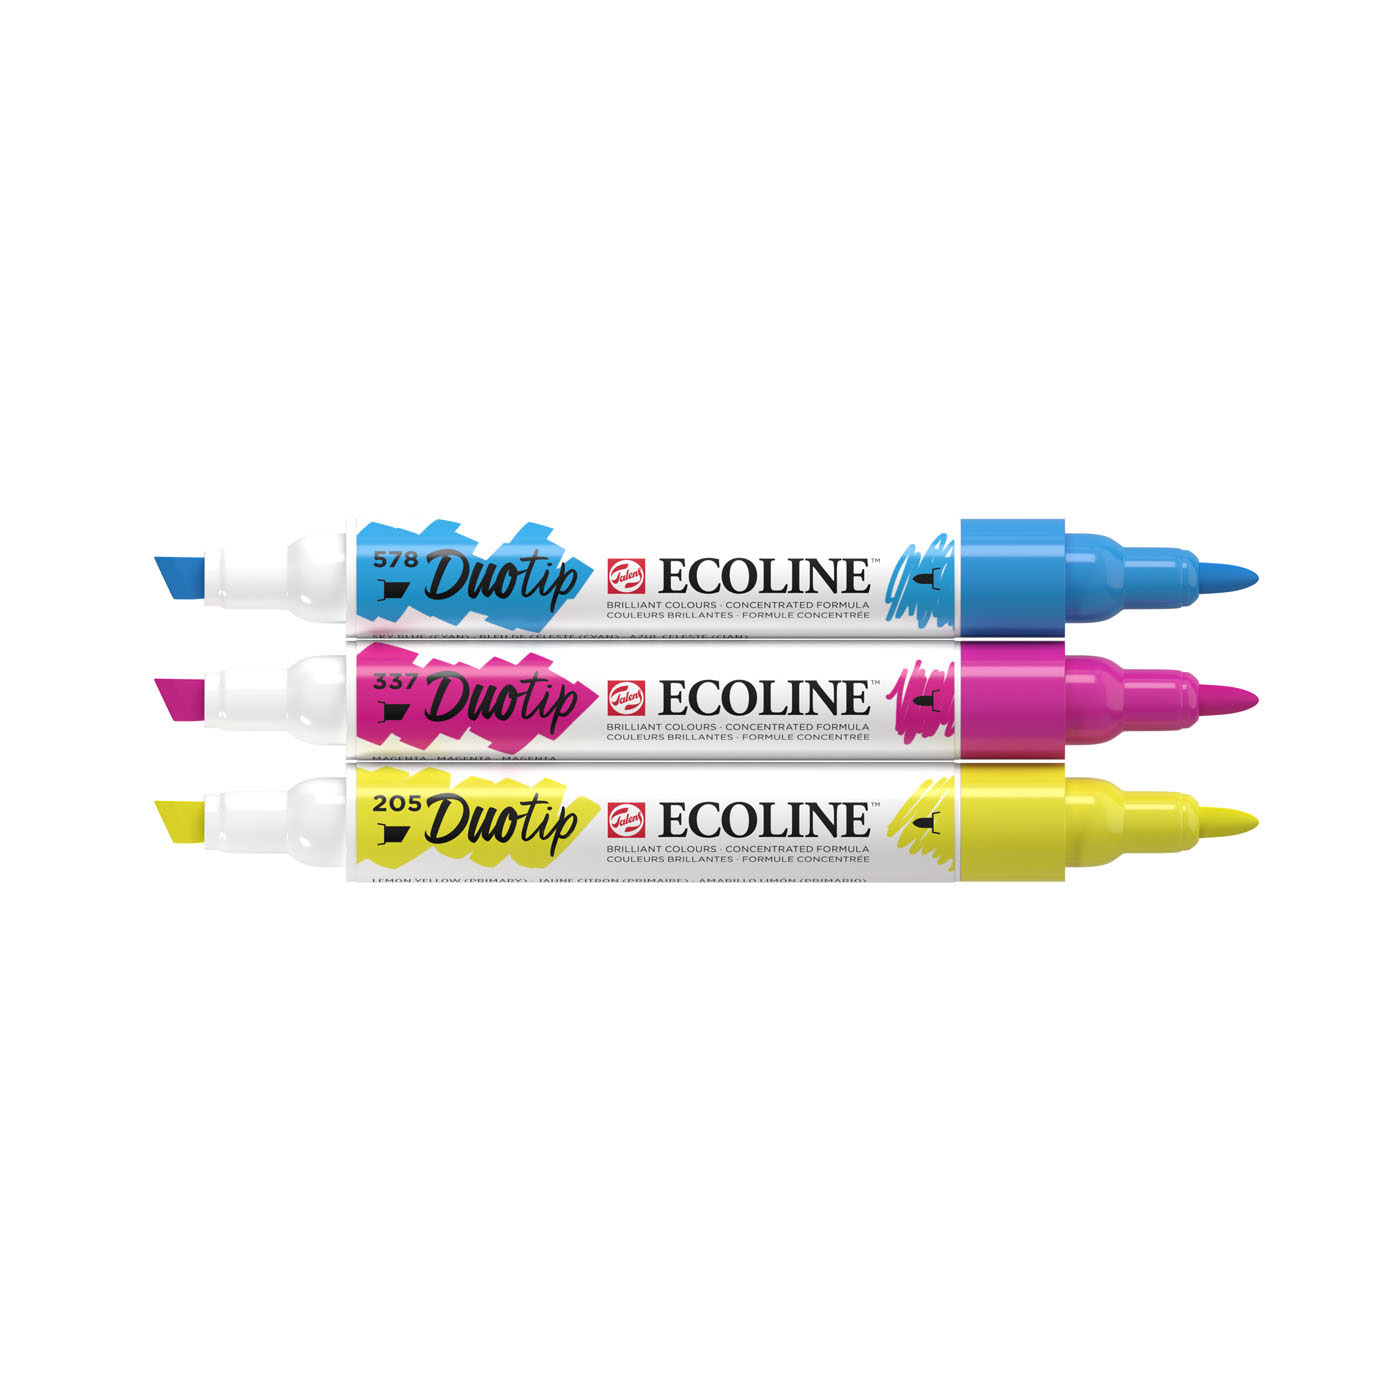 5-Color Primary Ecoline Brush Pen Set